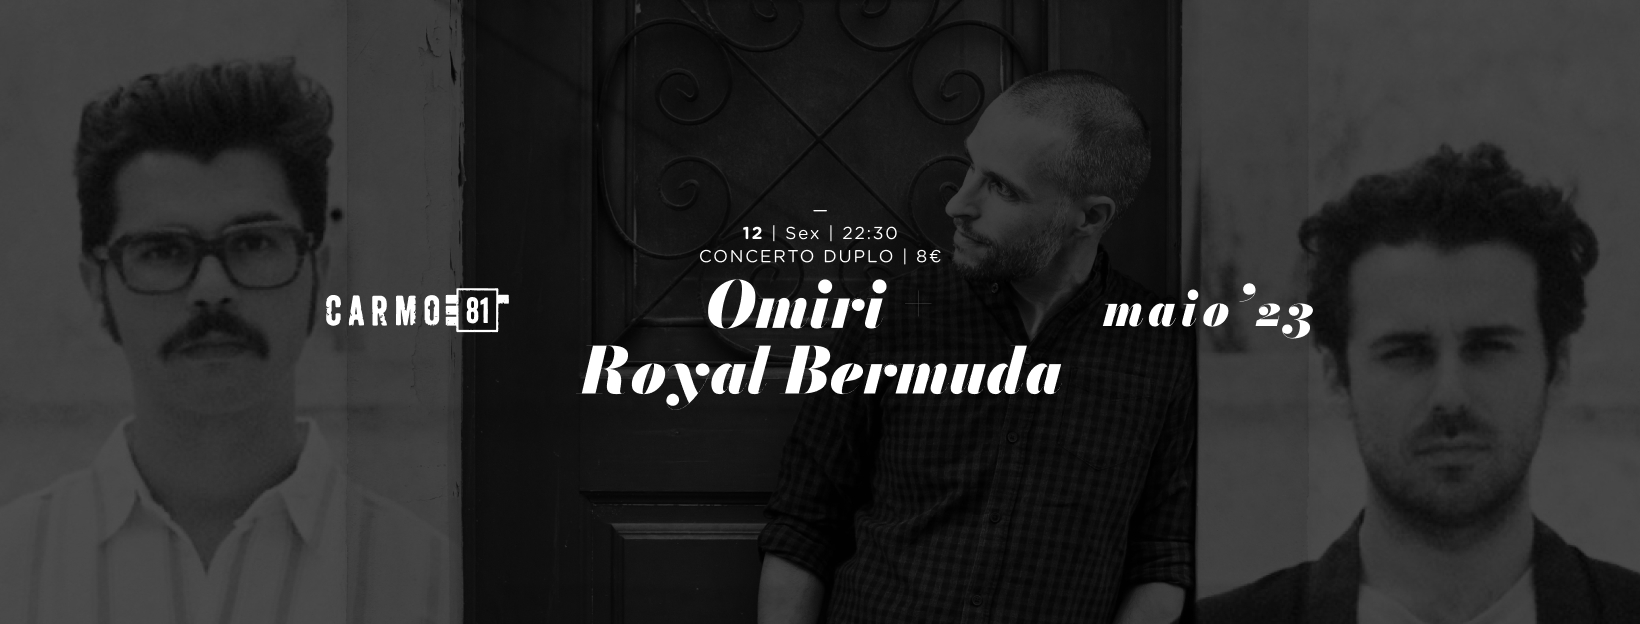 Omiri + Royal Bermuda - Carmo'81